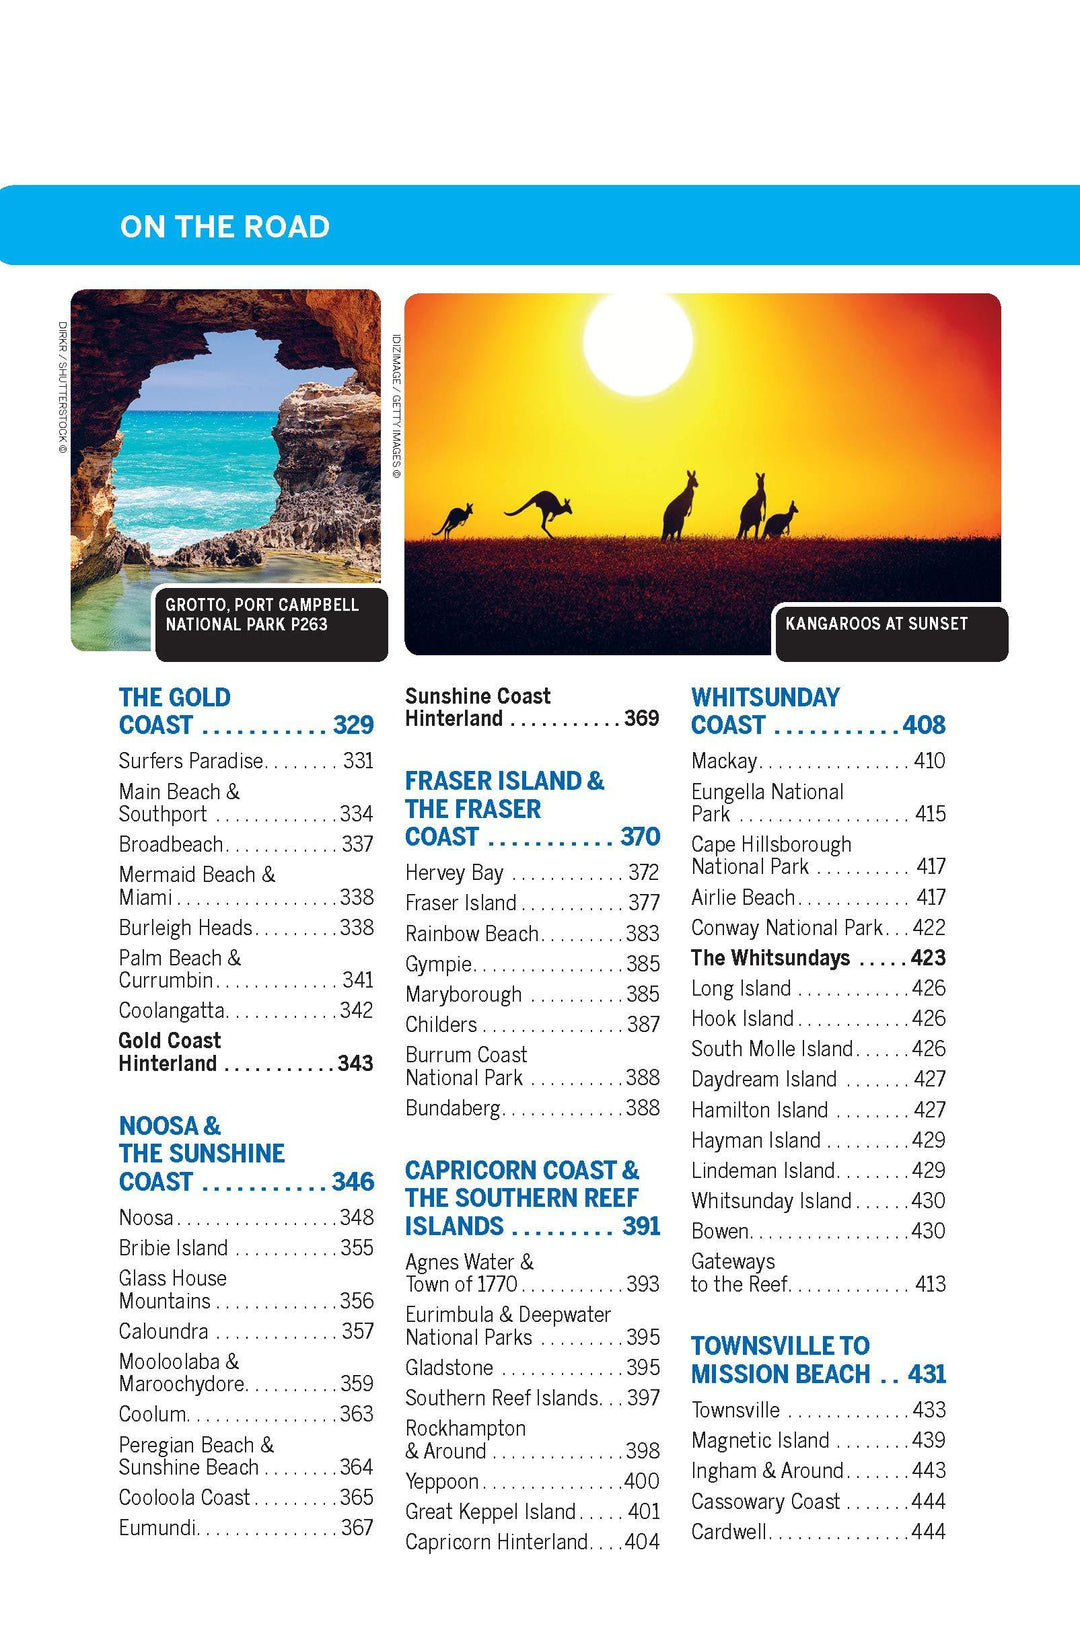 Guide de voyage (en anglais) - Australia East Coast - Édition 2021 | Lonely Planet guide de voyage Lonely Planet 